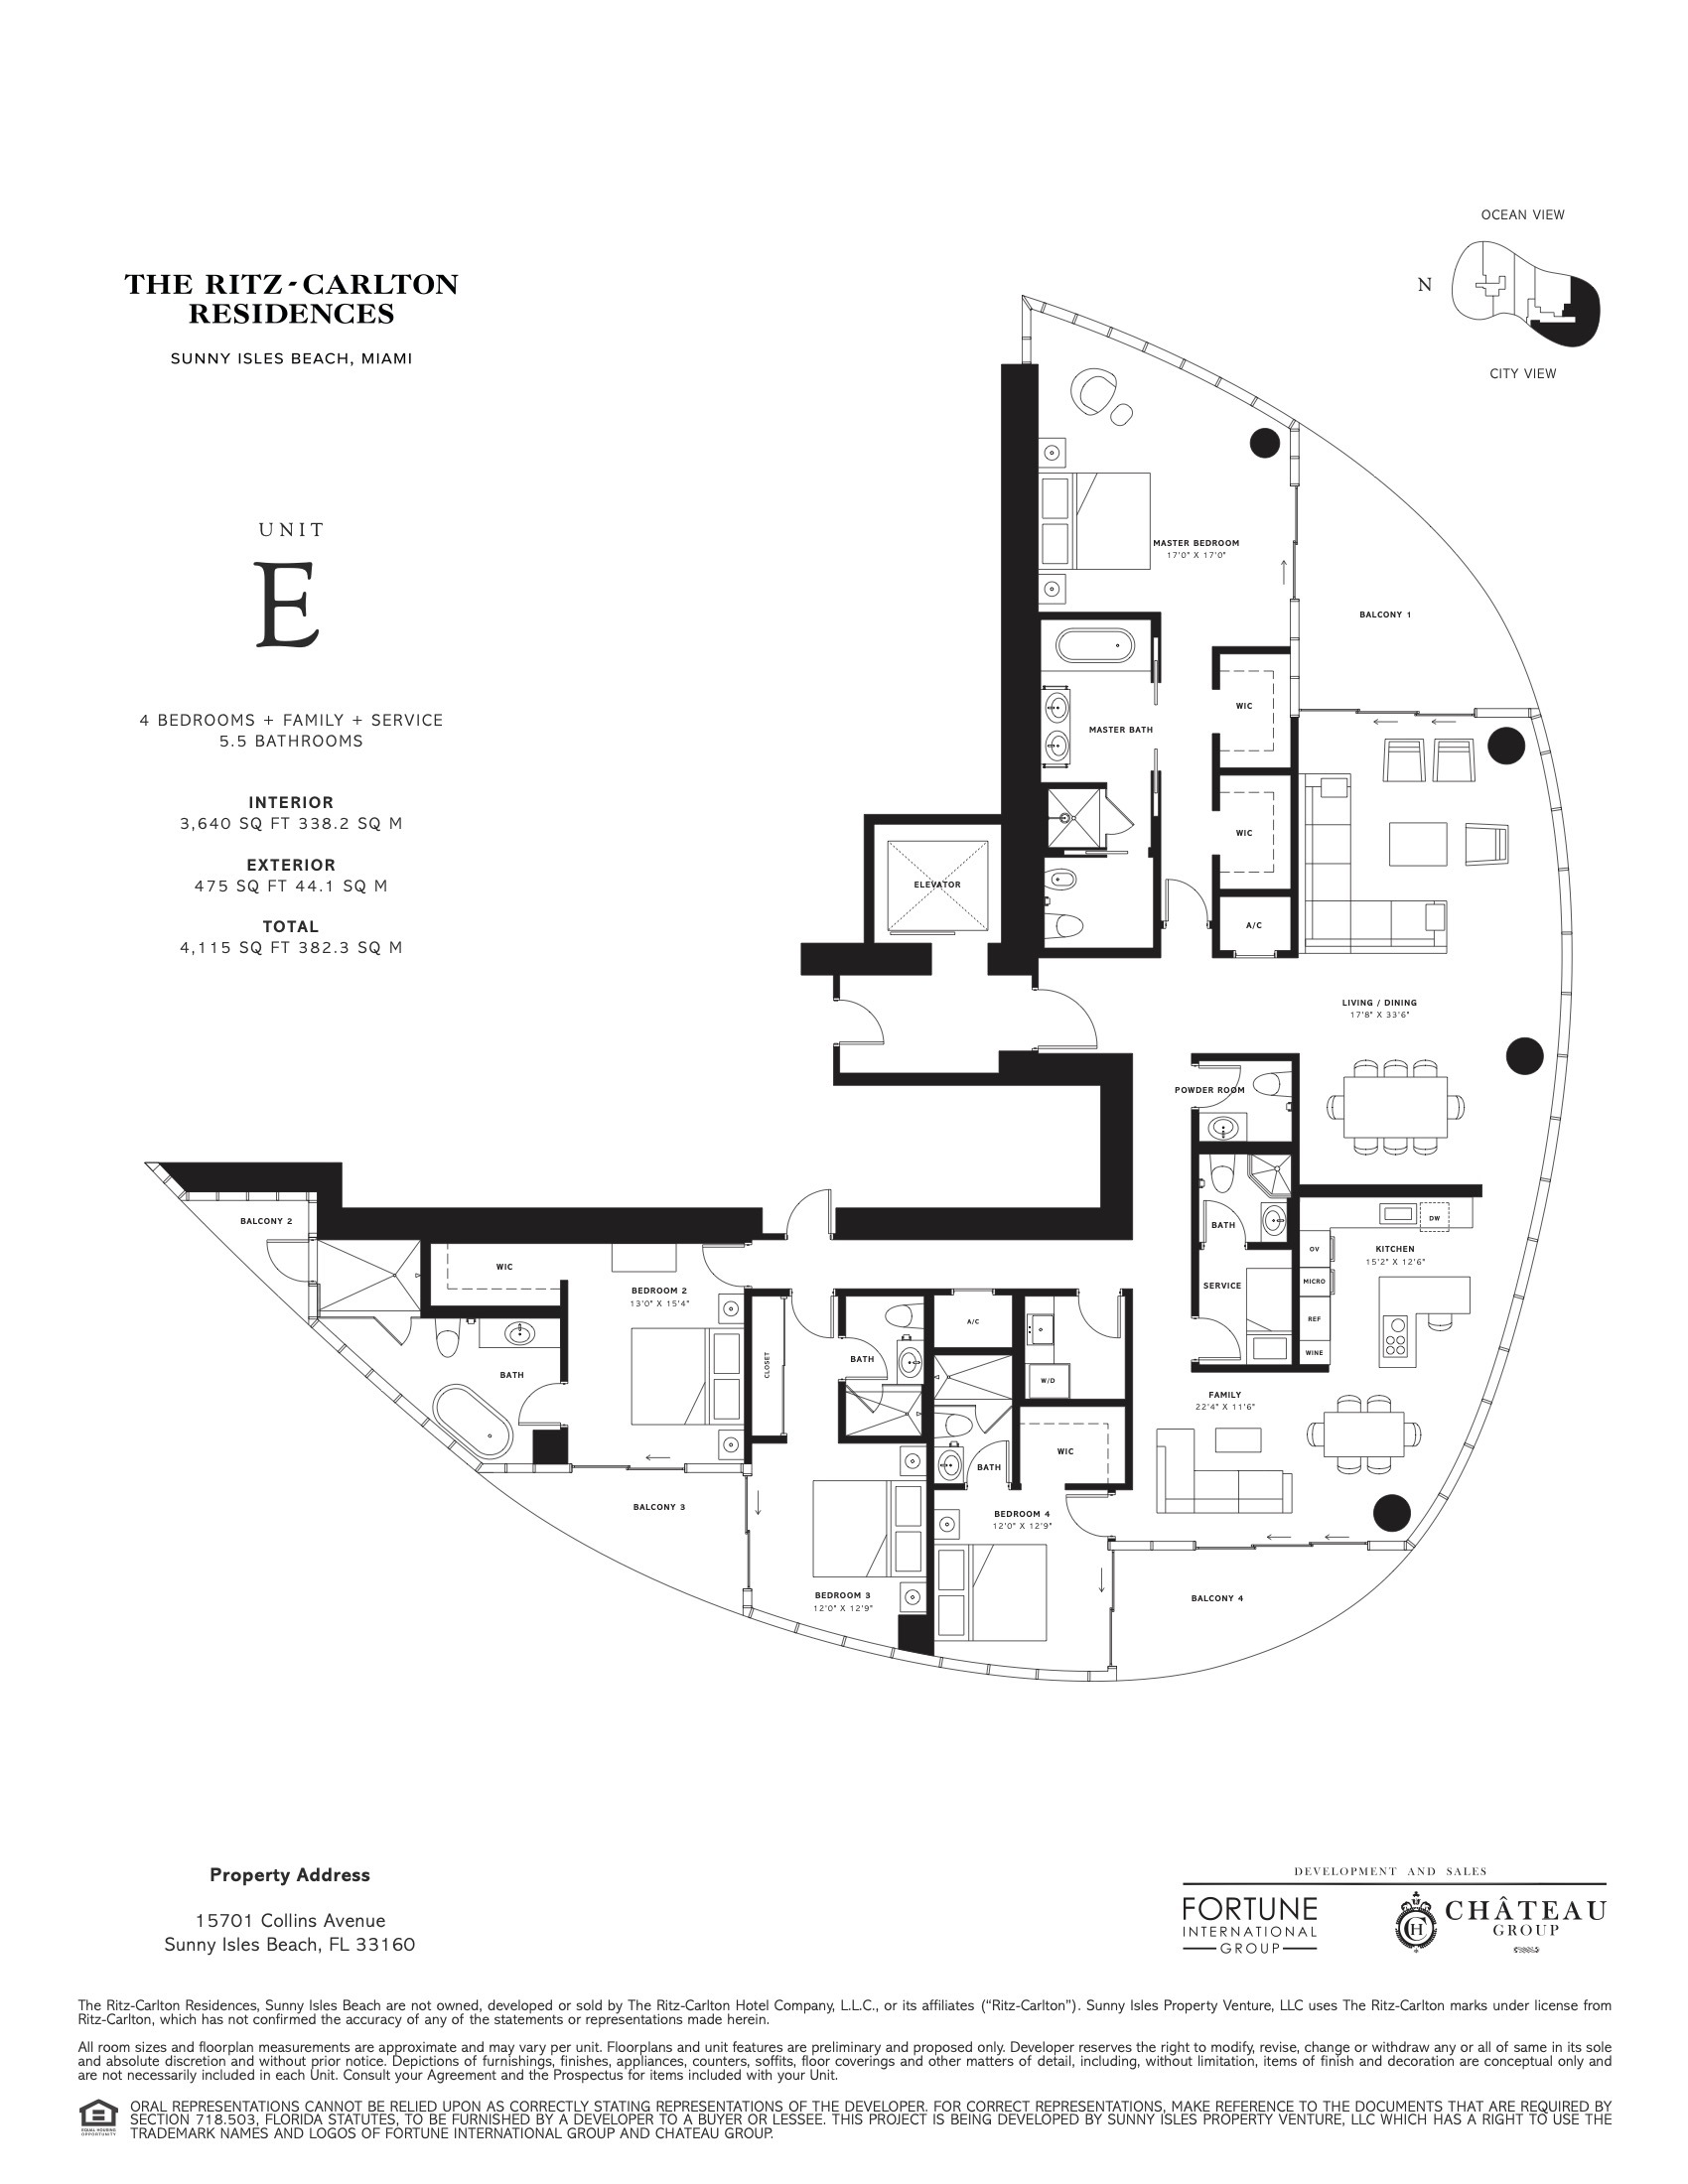 Floor Plan for Ritz-Carlton Sunny Isles Floorplans, Unit E